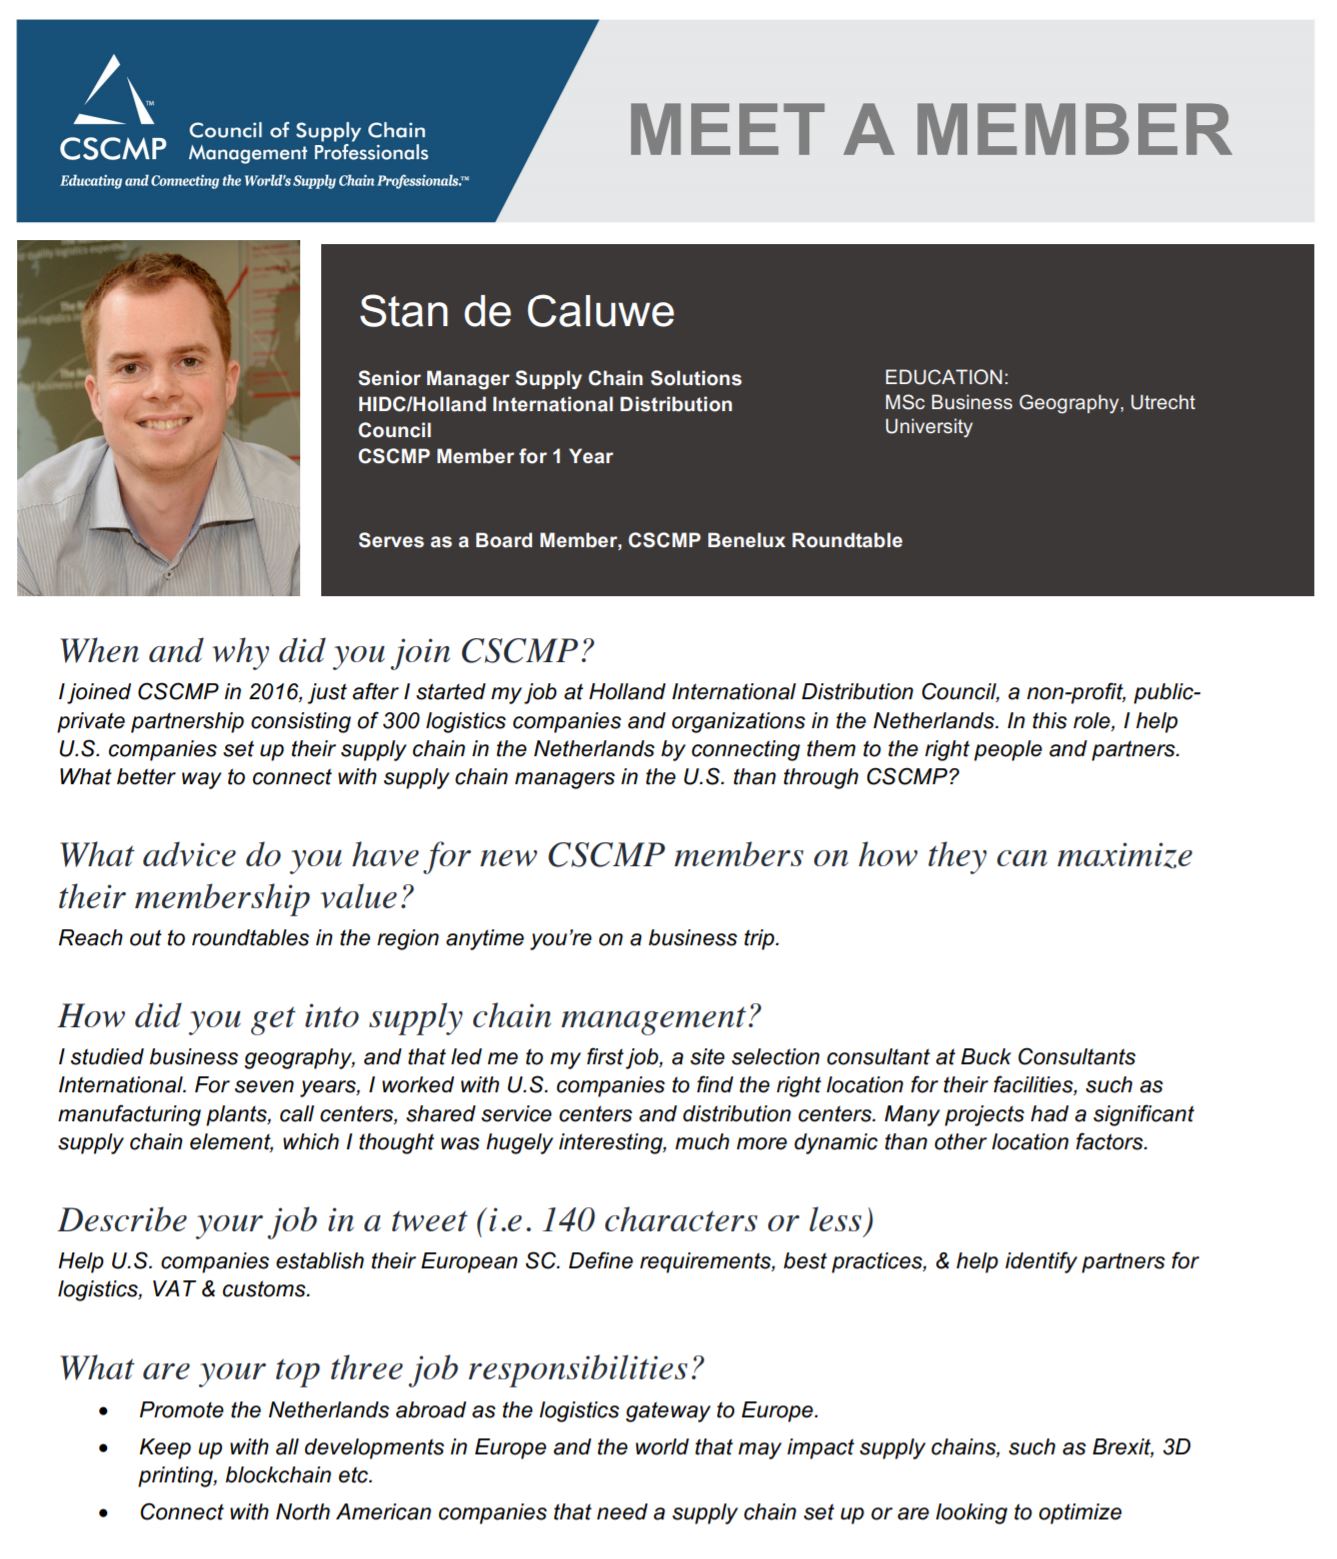 Meet a Member: Stan de Caluwe